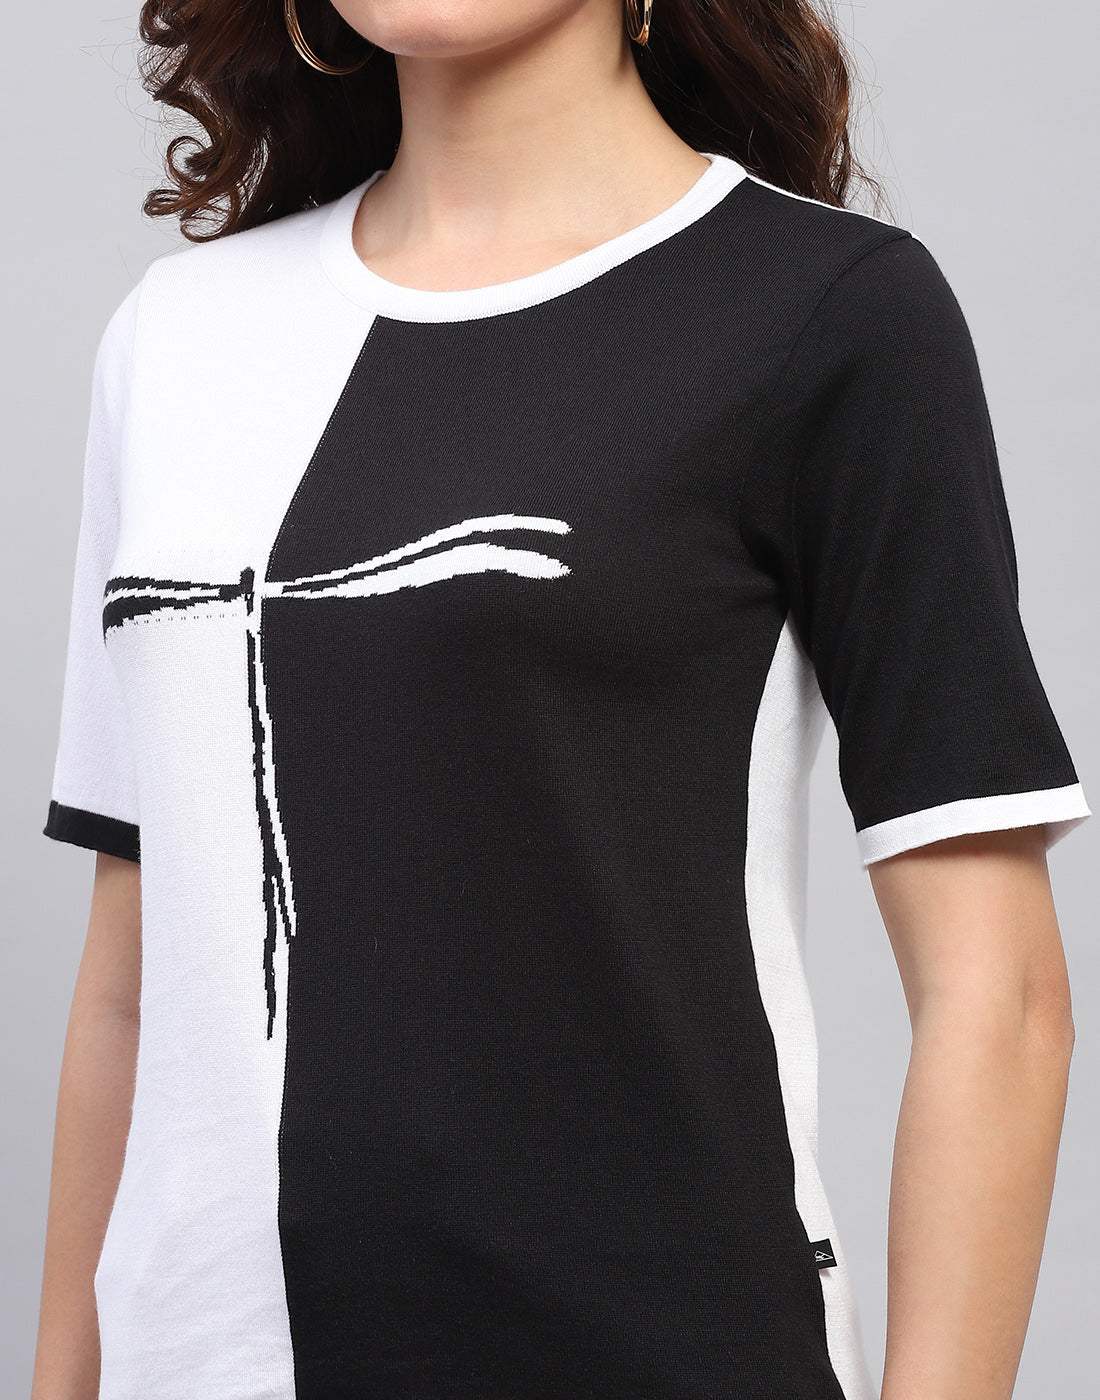 Women Black & White Colourblocked Round Neck Half Sleeve Top